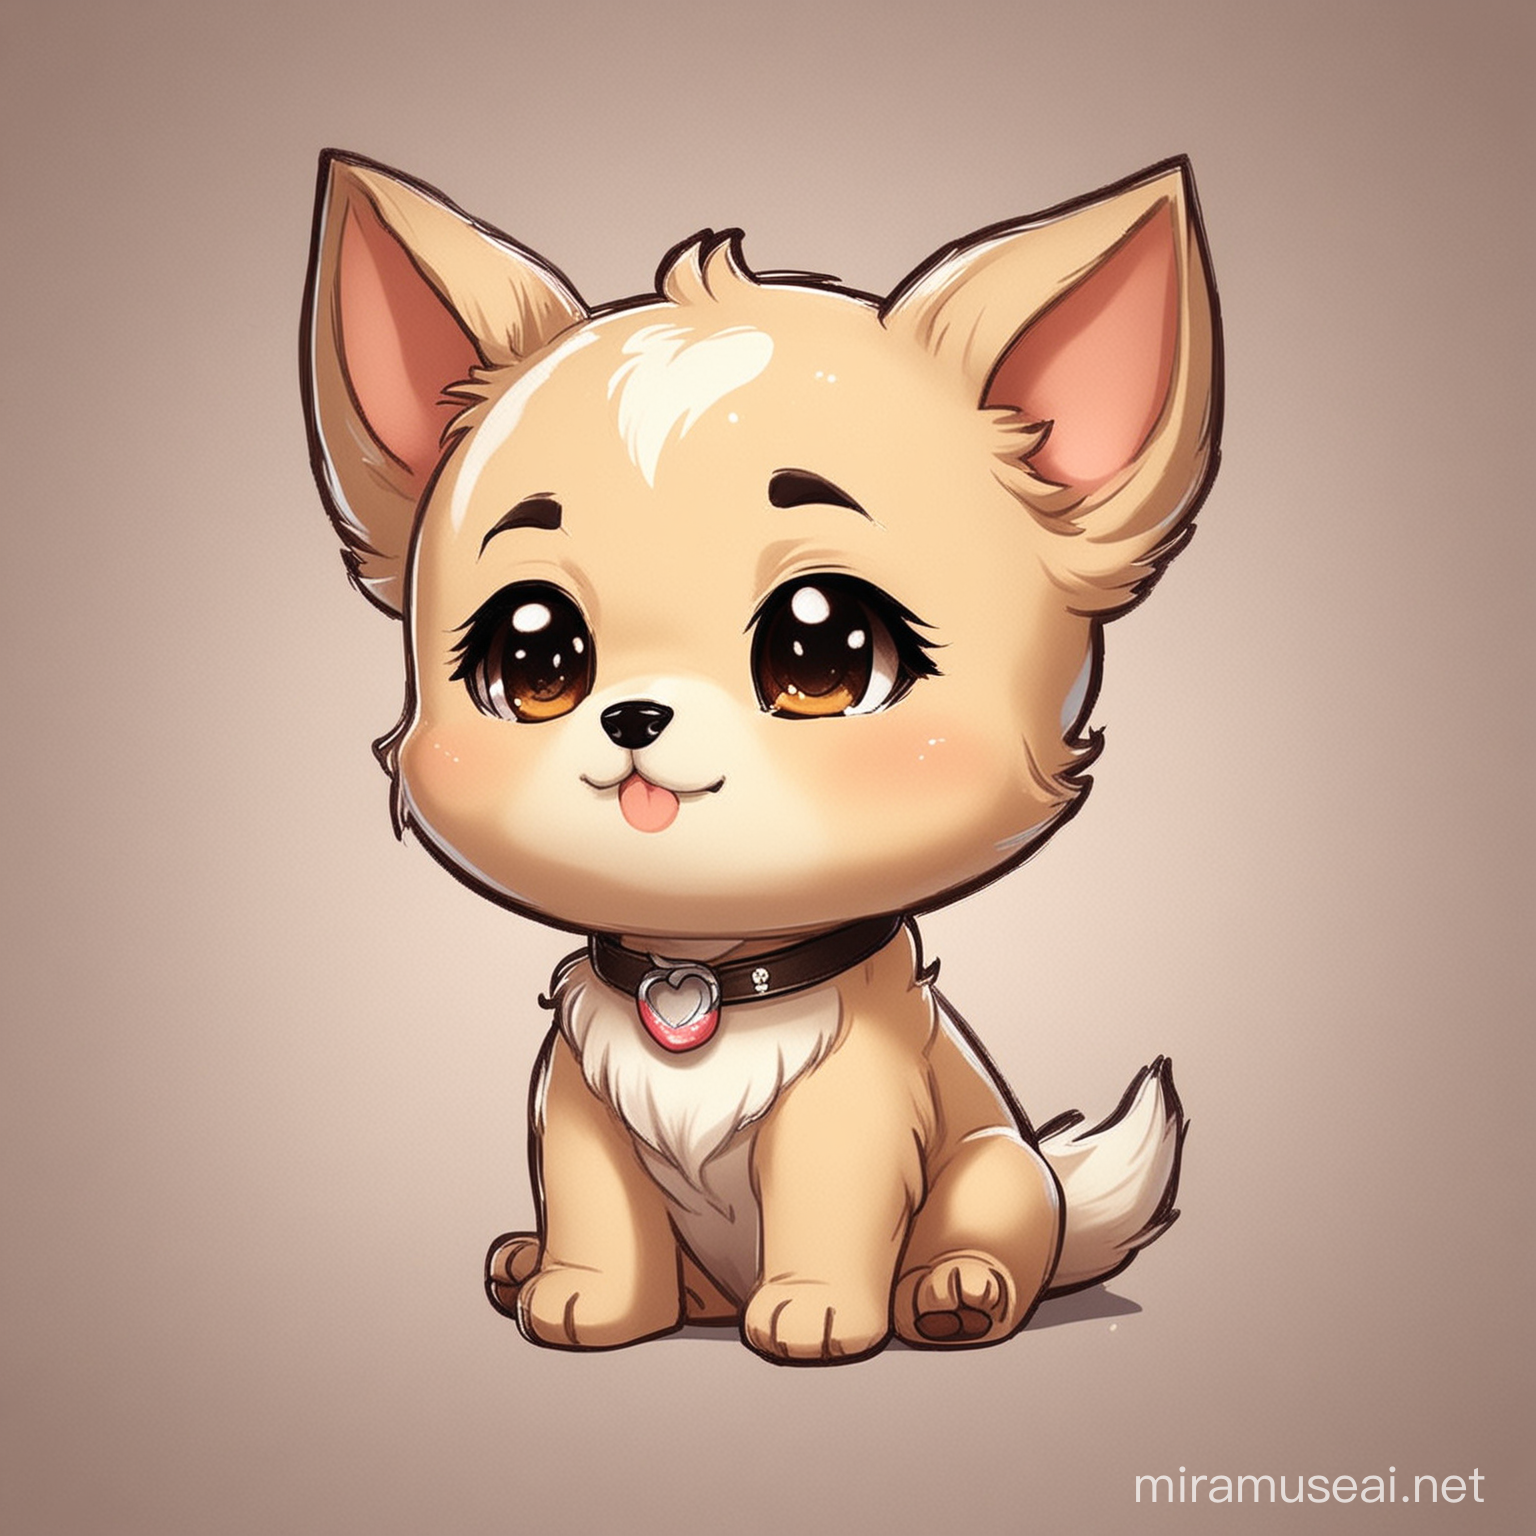 Cute Chibi Dog Character Illustration